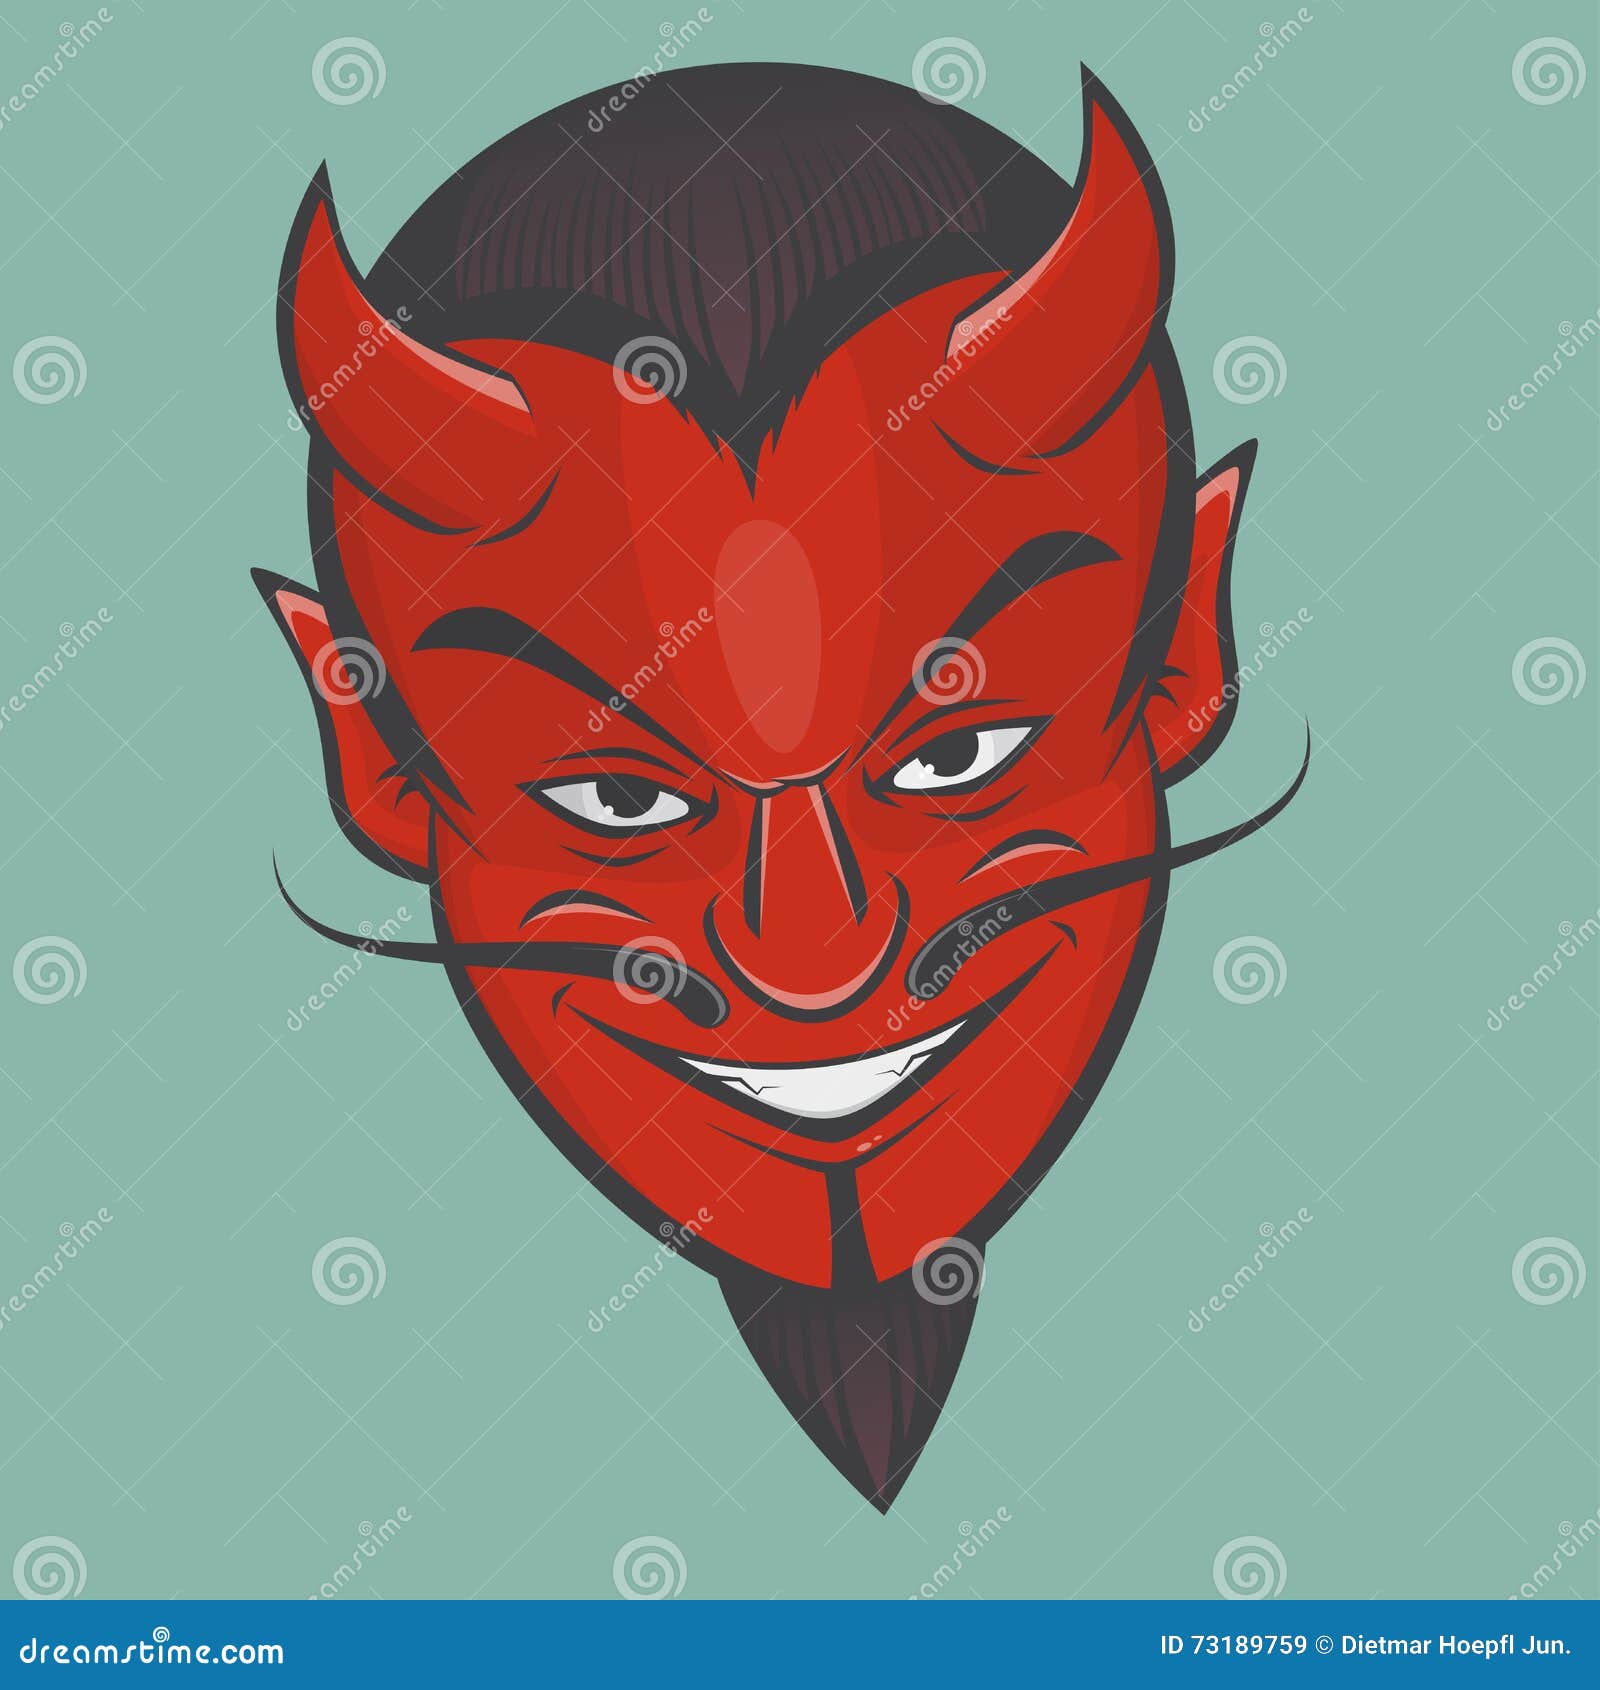 sinister satan face clipart